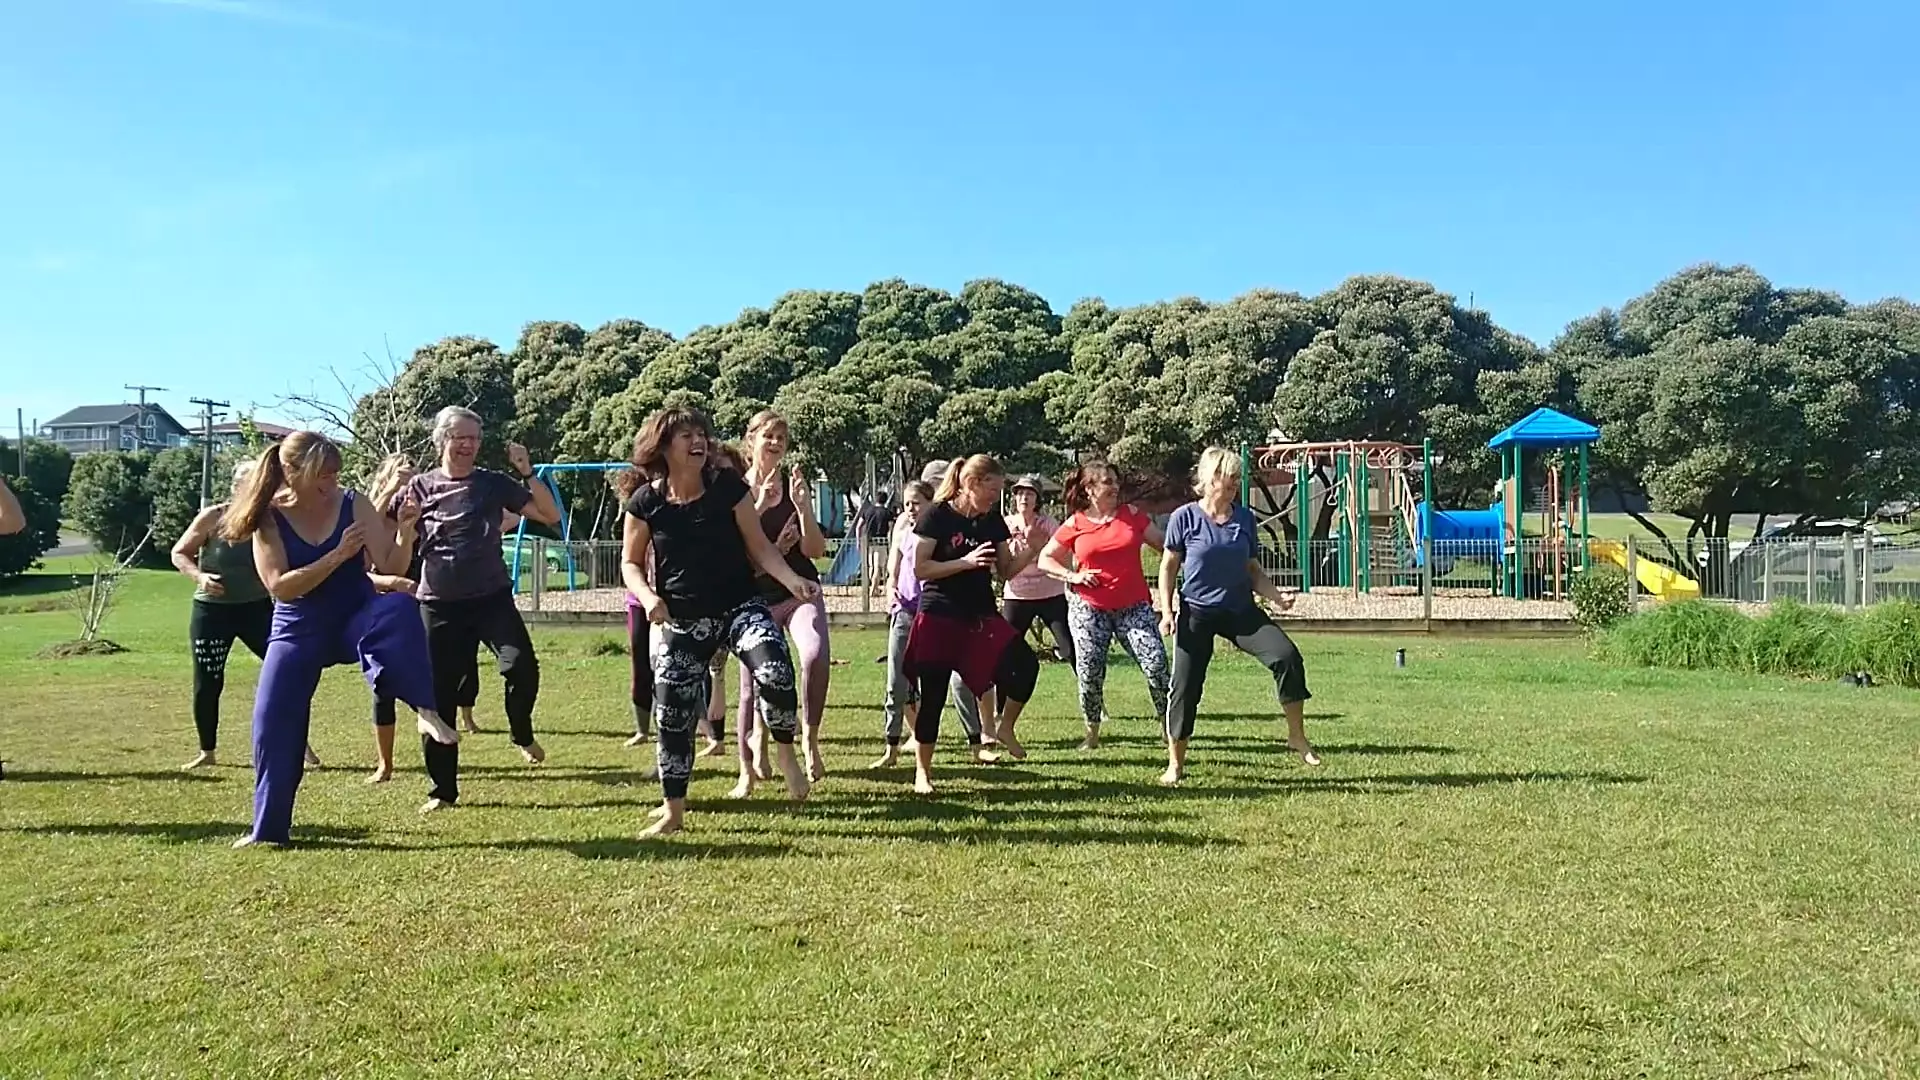 NZ Dance Class Out in the Sun!